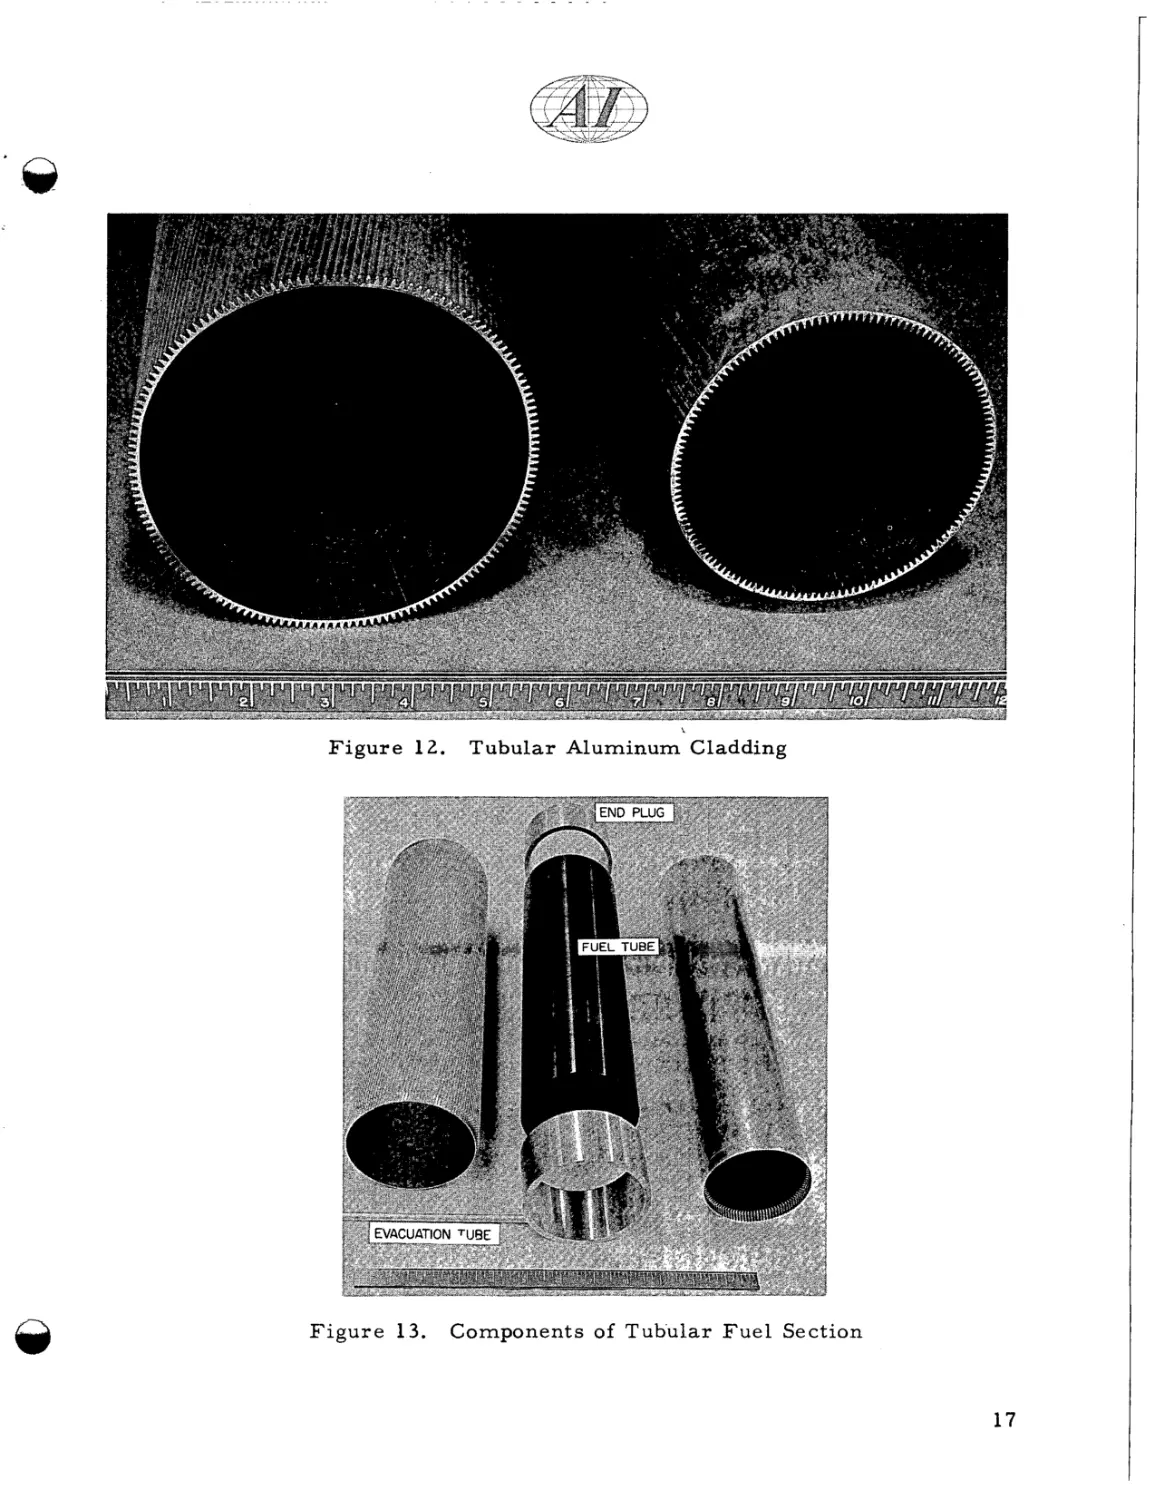 Tubular Aluminum Cladding (7515- 51267A
Components of Tubular Fuel Section (7515-51349D)